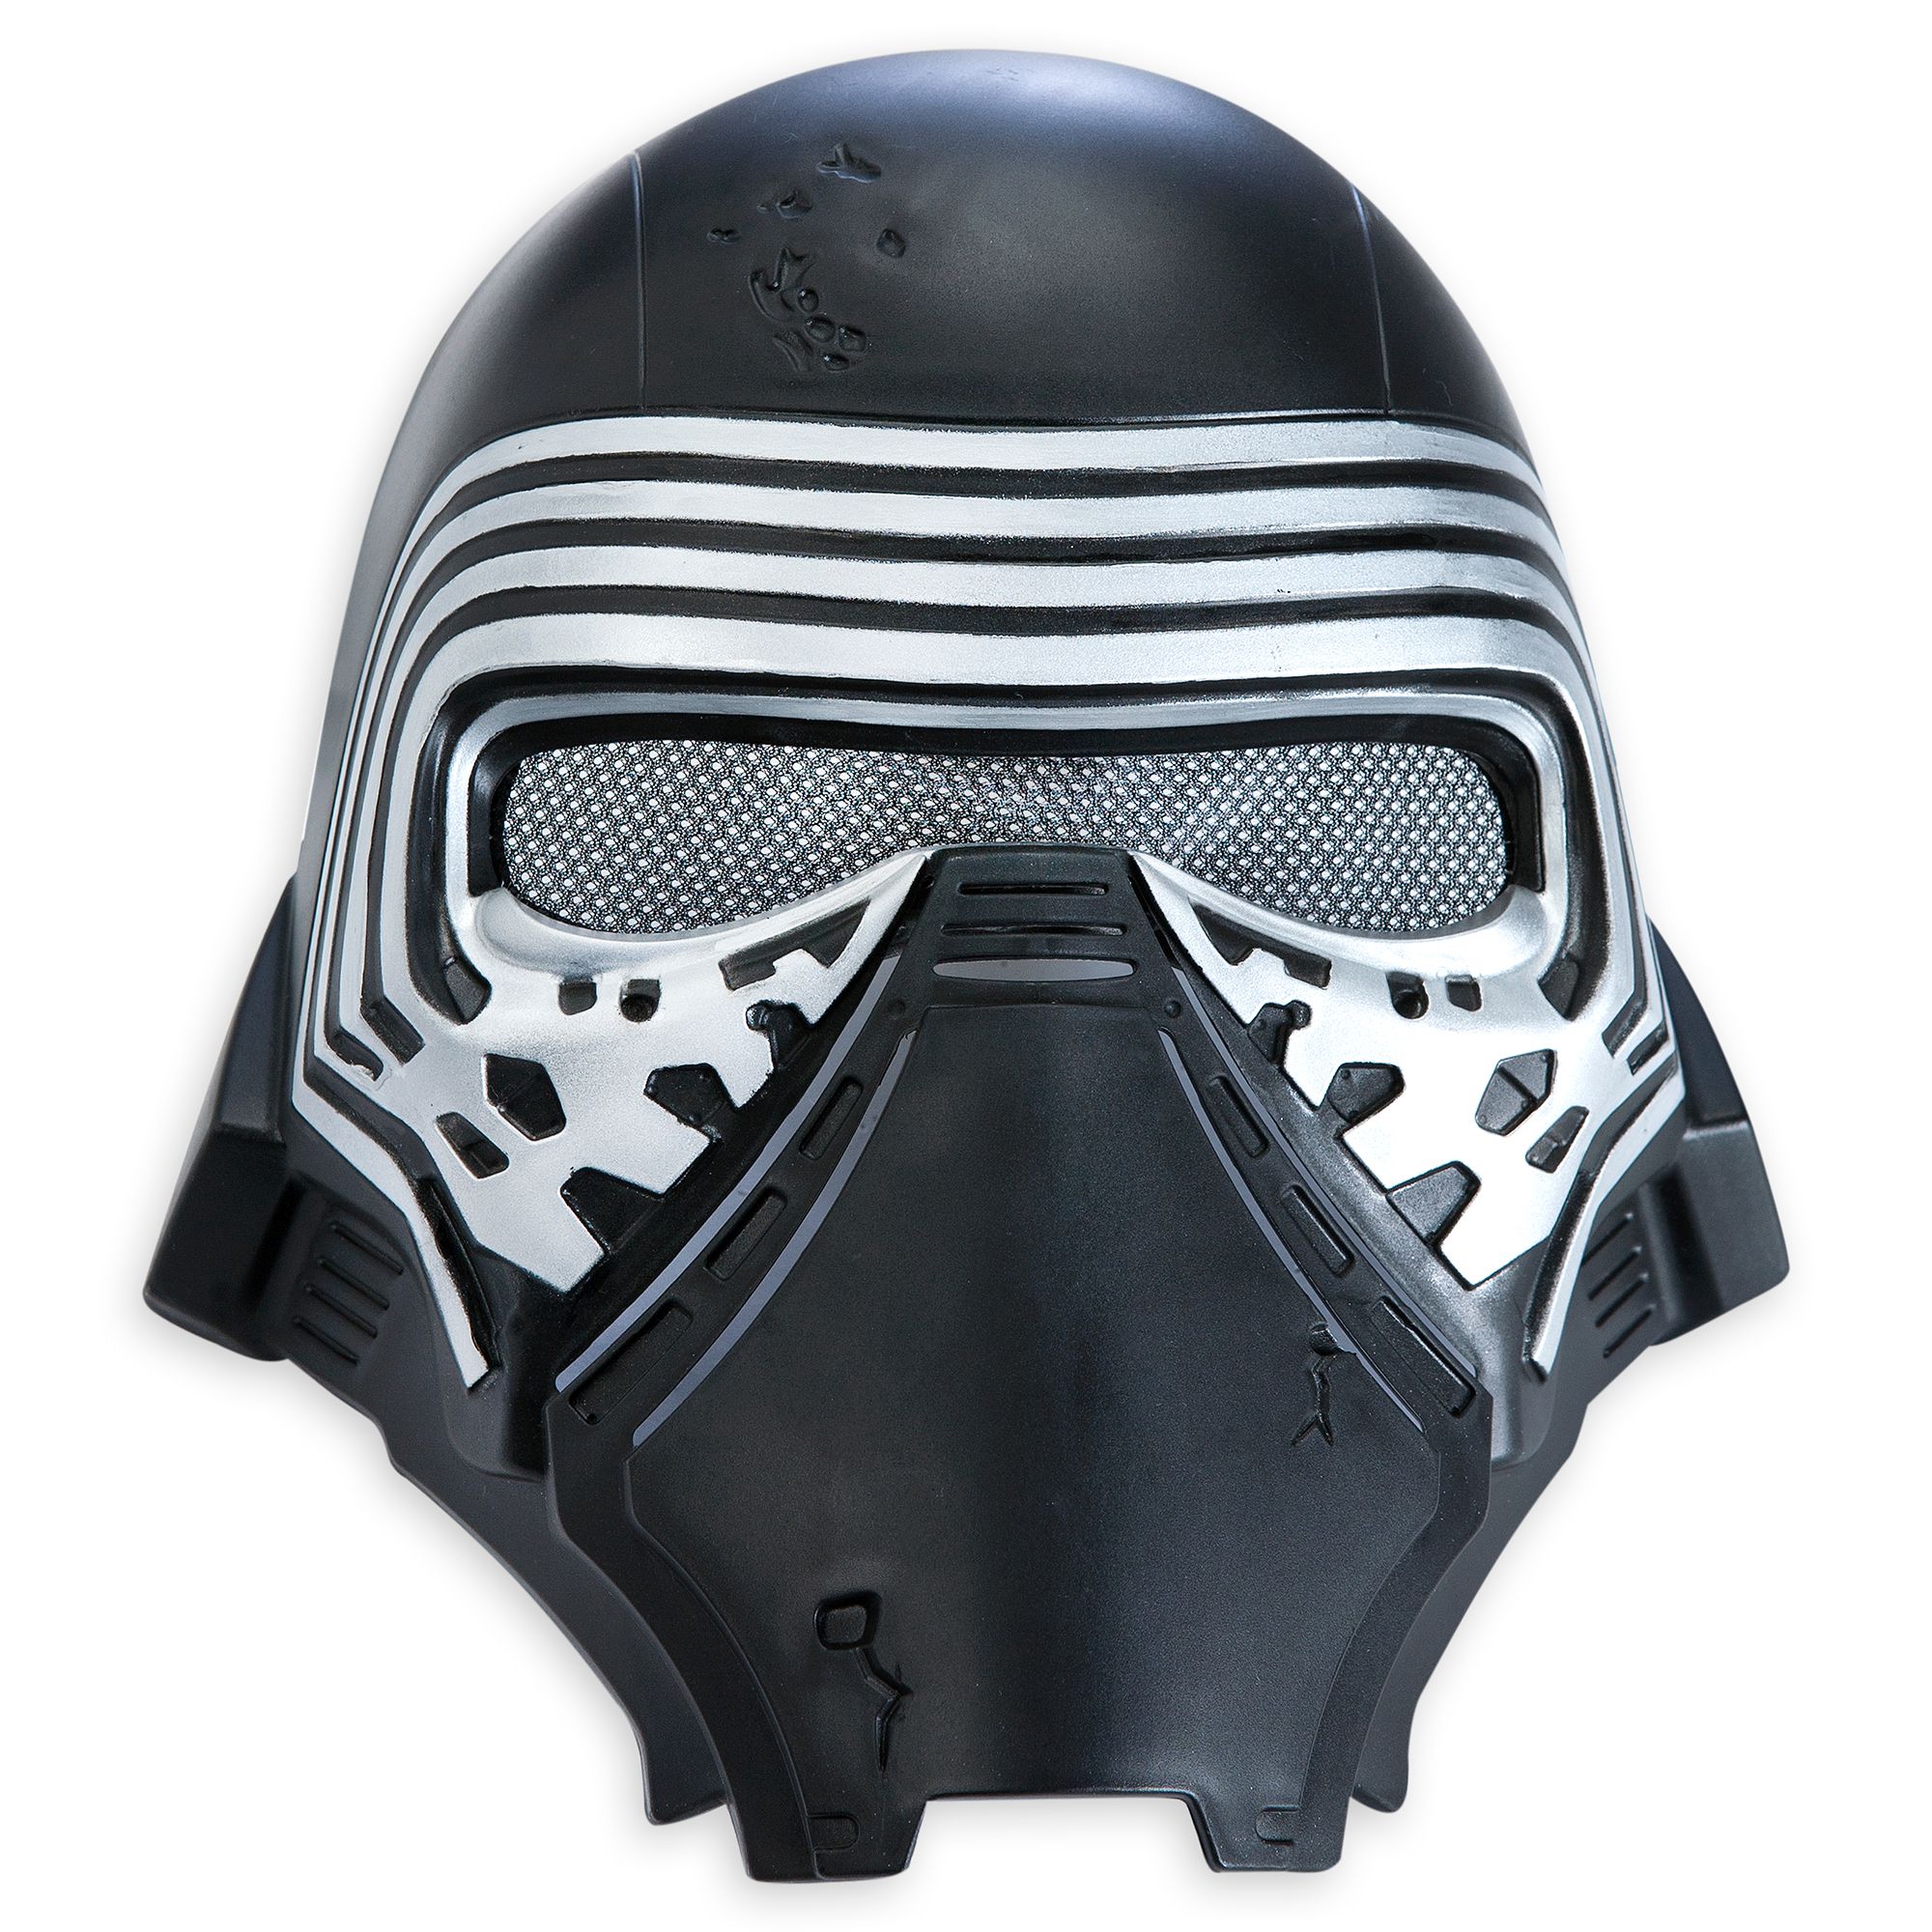 The Force Awakens Disney Store Kylo Ren Costume for Kids  Star Wars